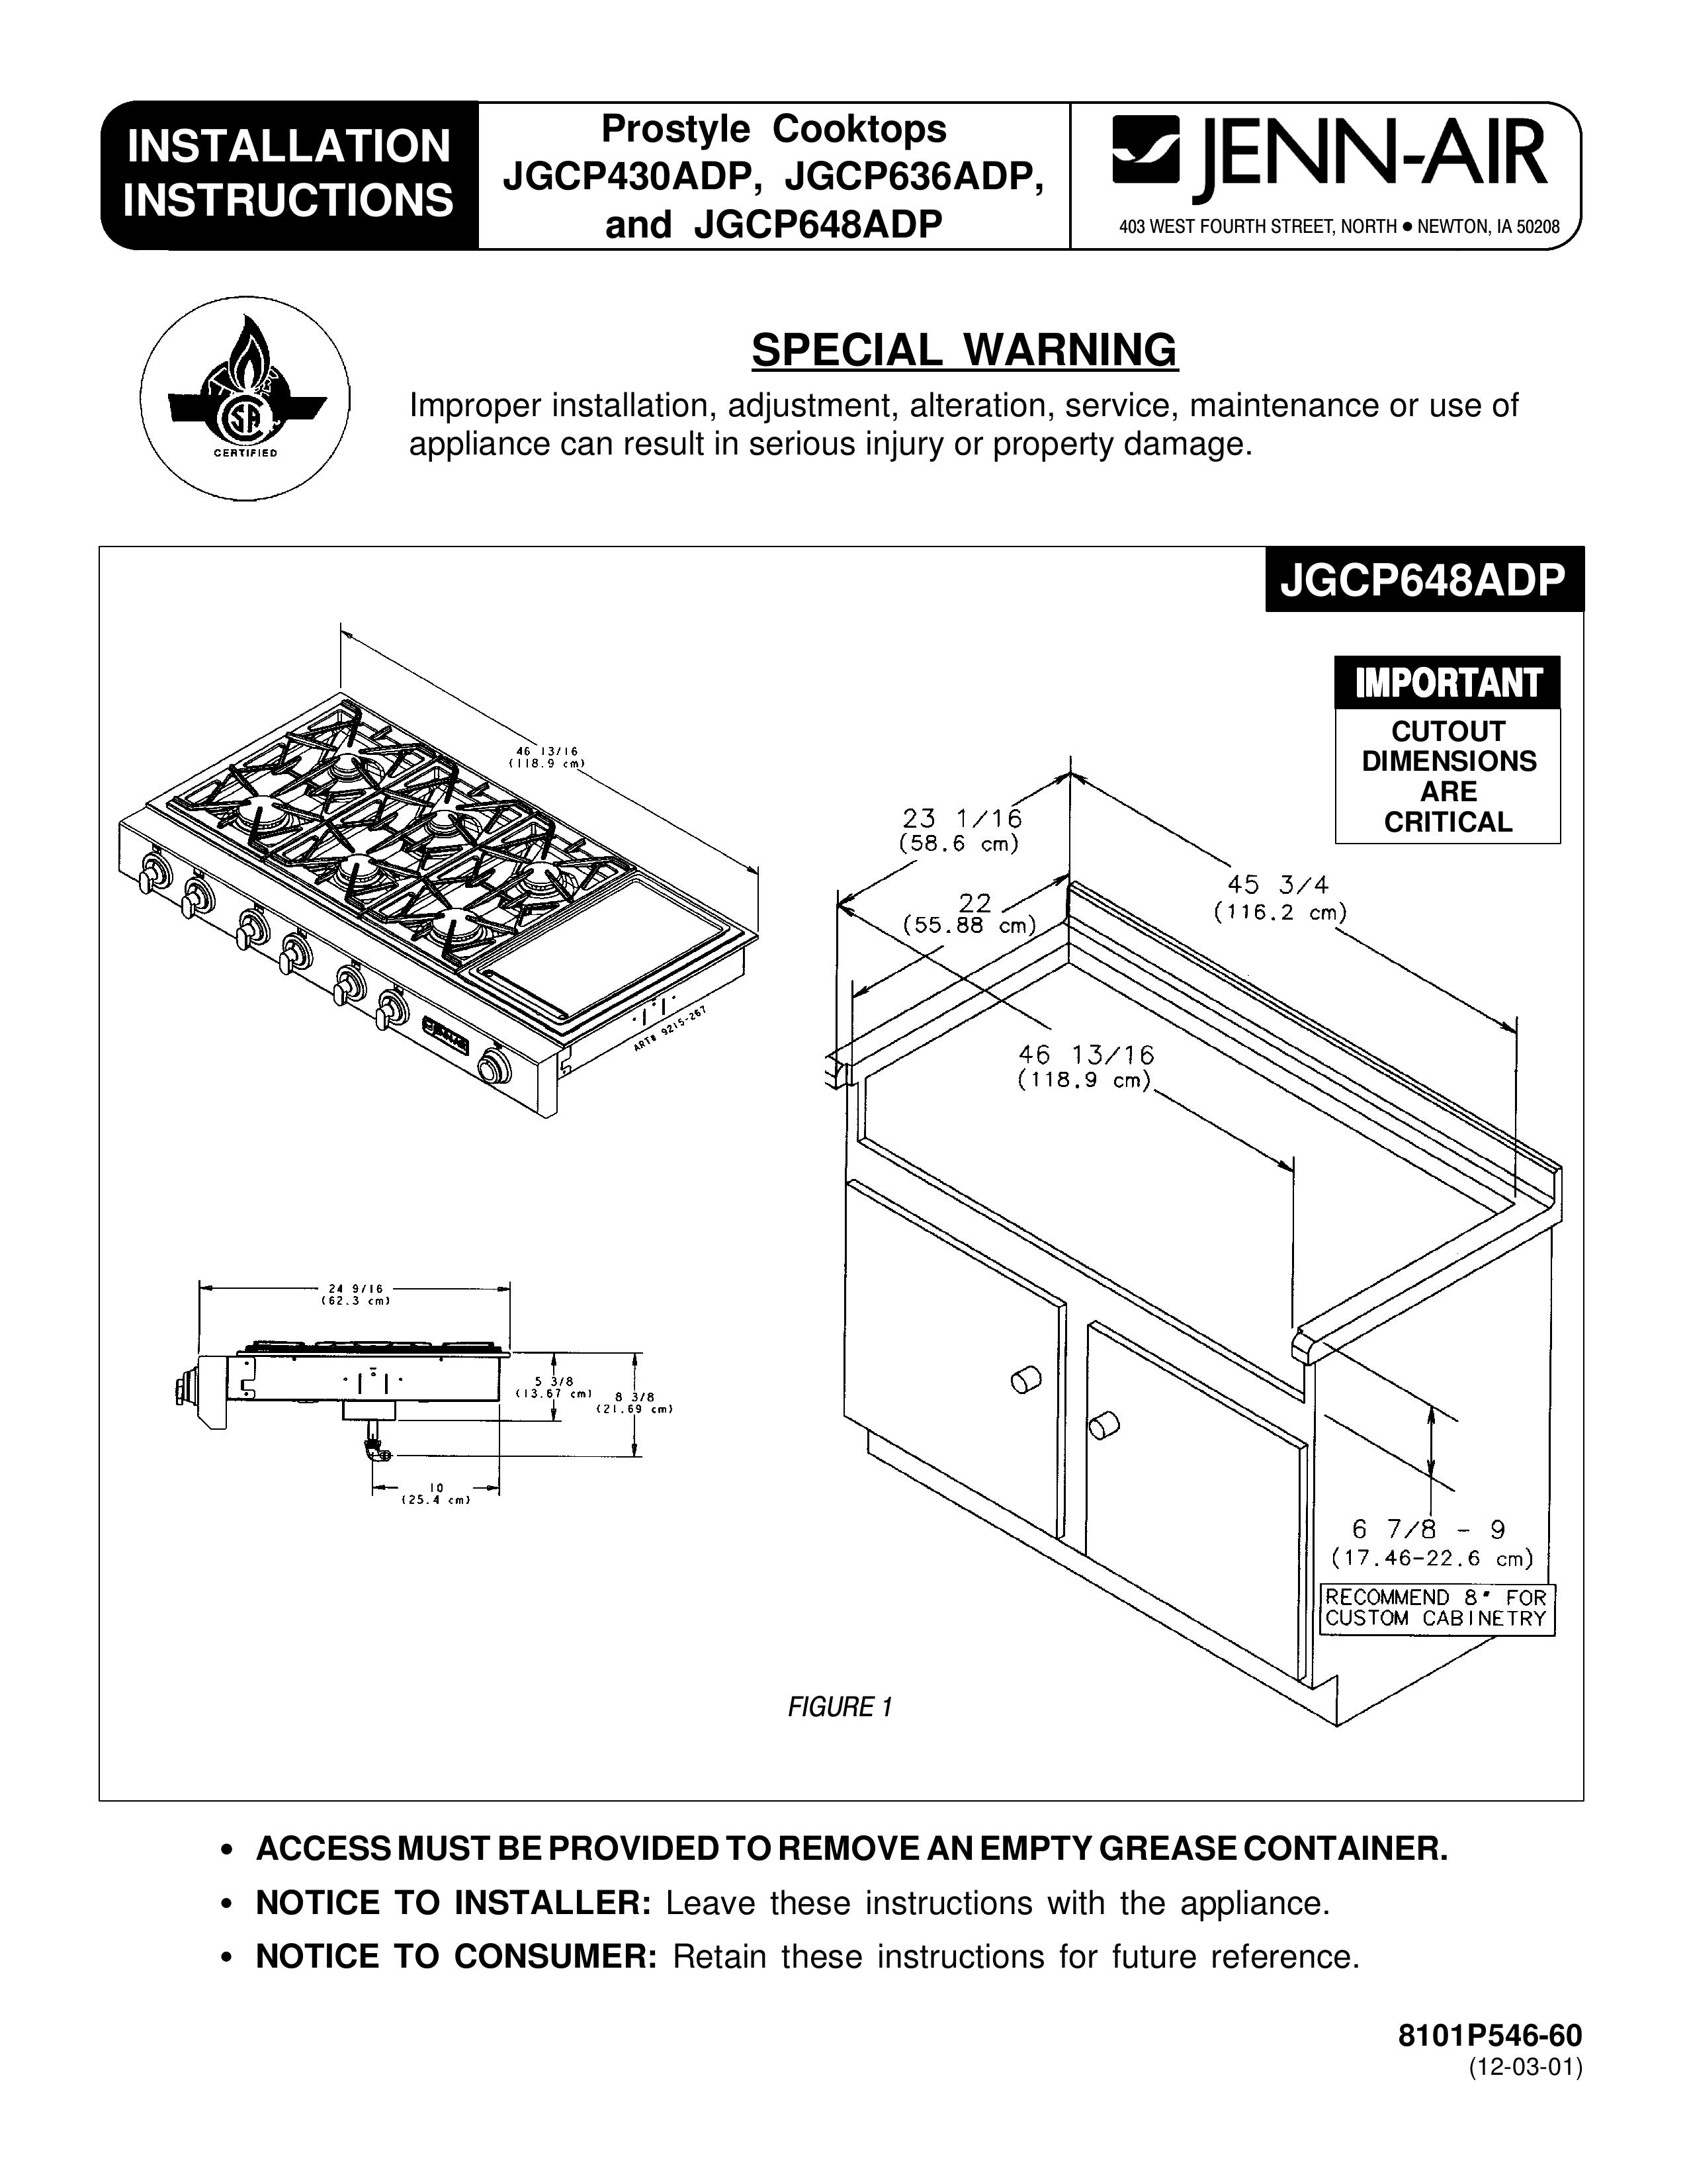 Jenn-Air JGCP430ADP Ventilation Hood User Manual